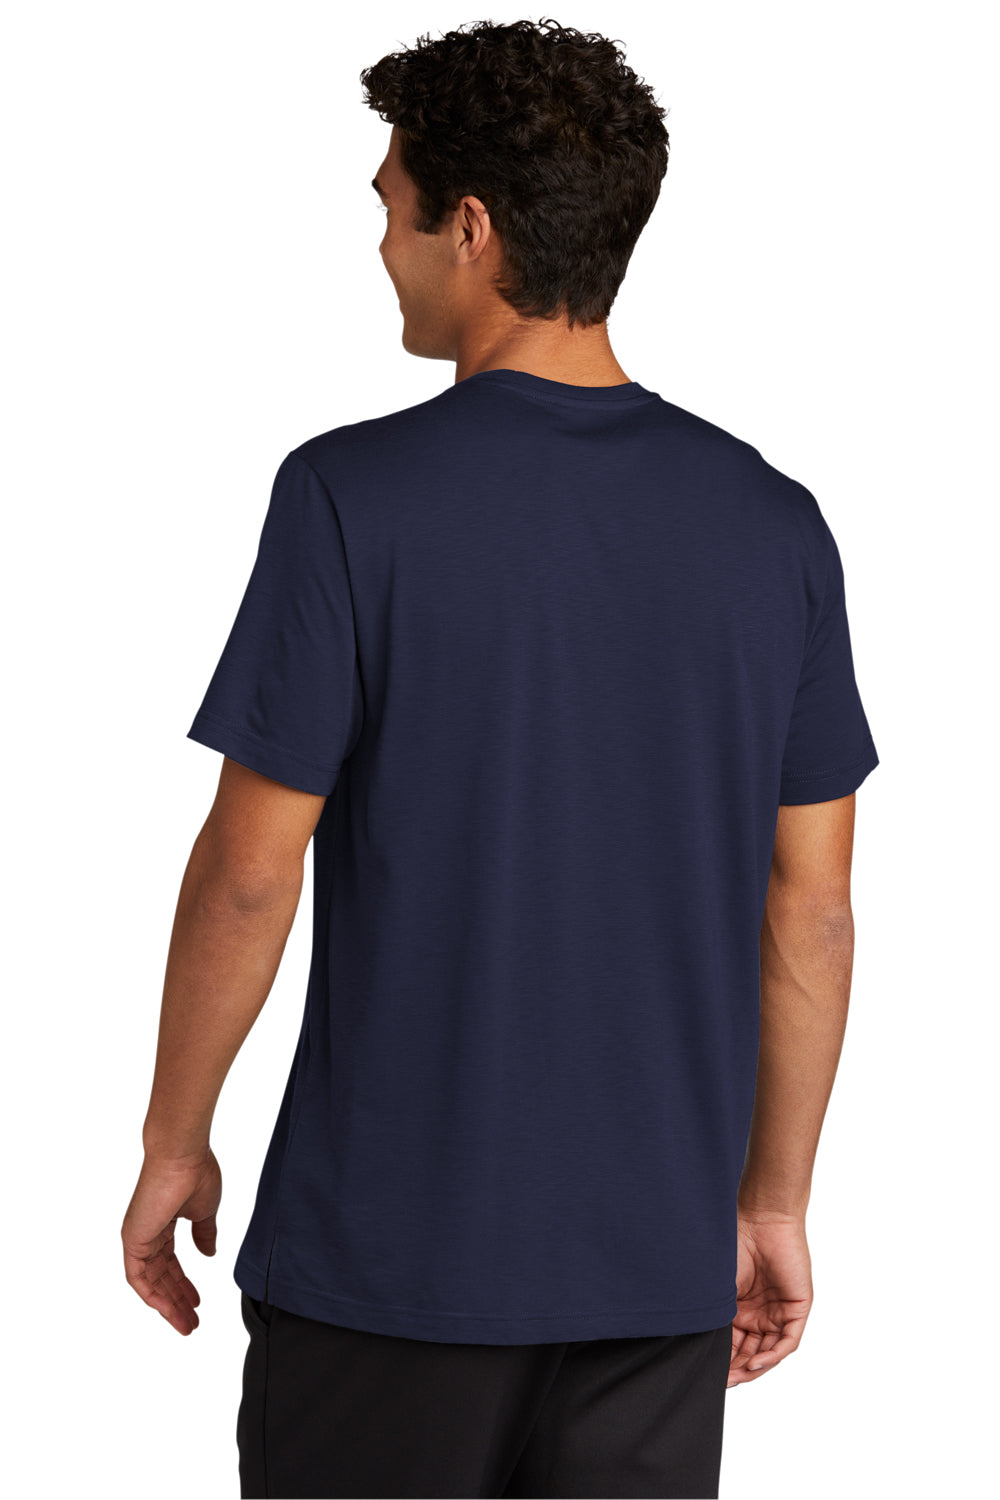 Sport-Tek Mens Strive Short Sleeve Crewneck T-Shirt True Navy Blue Side